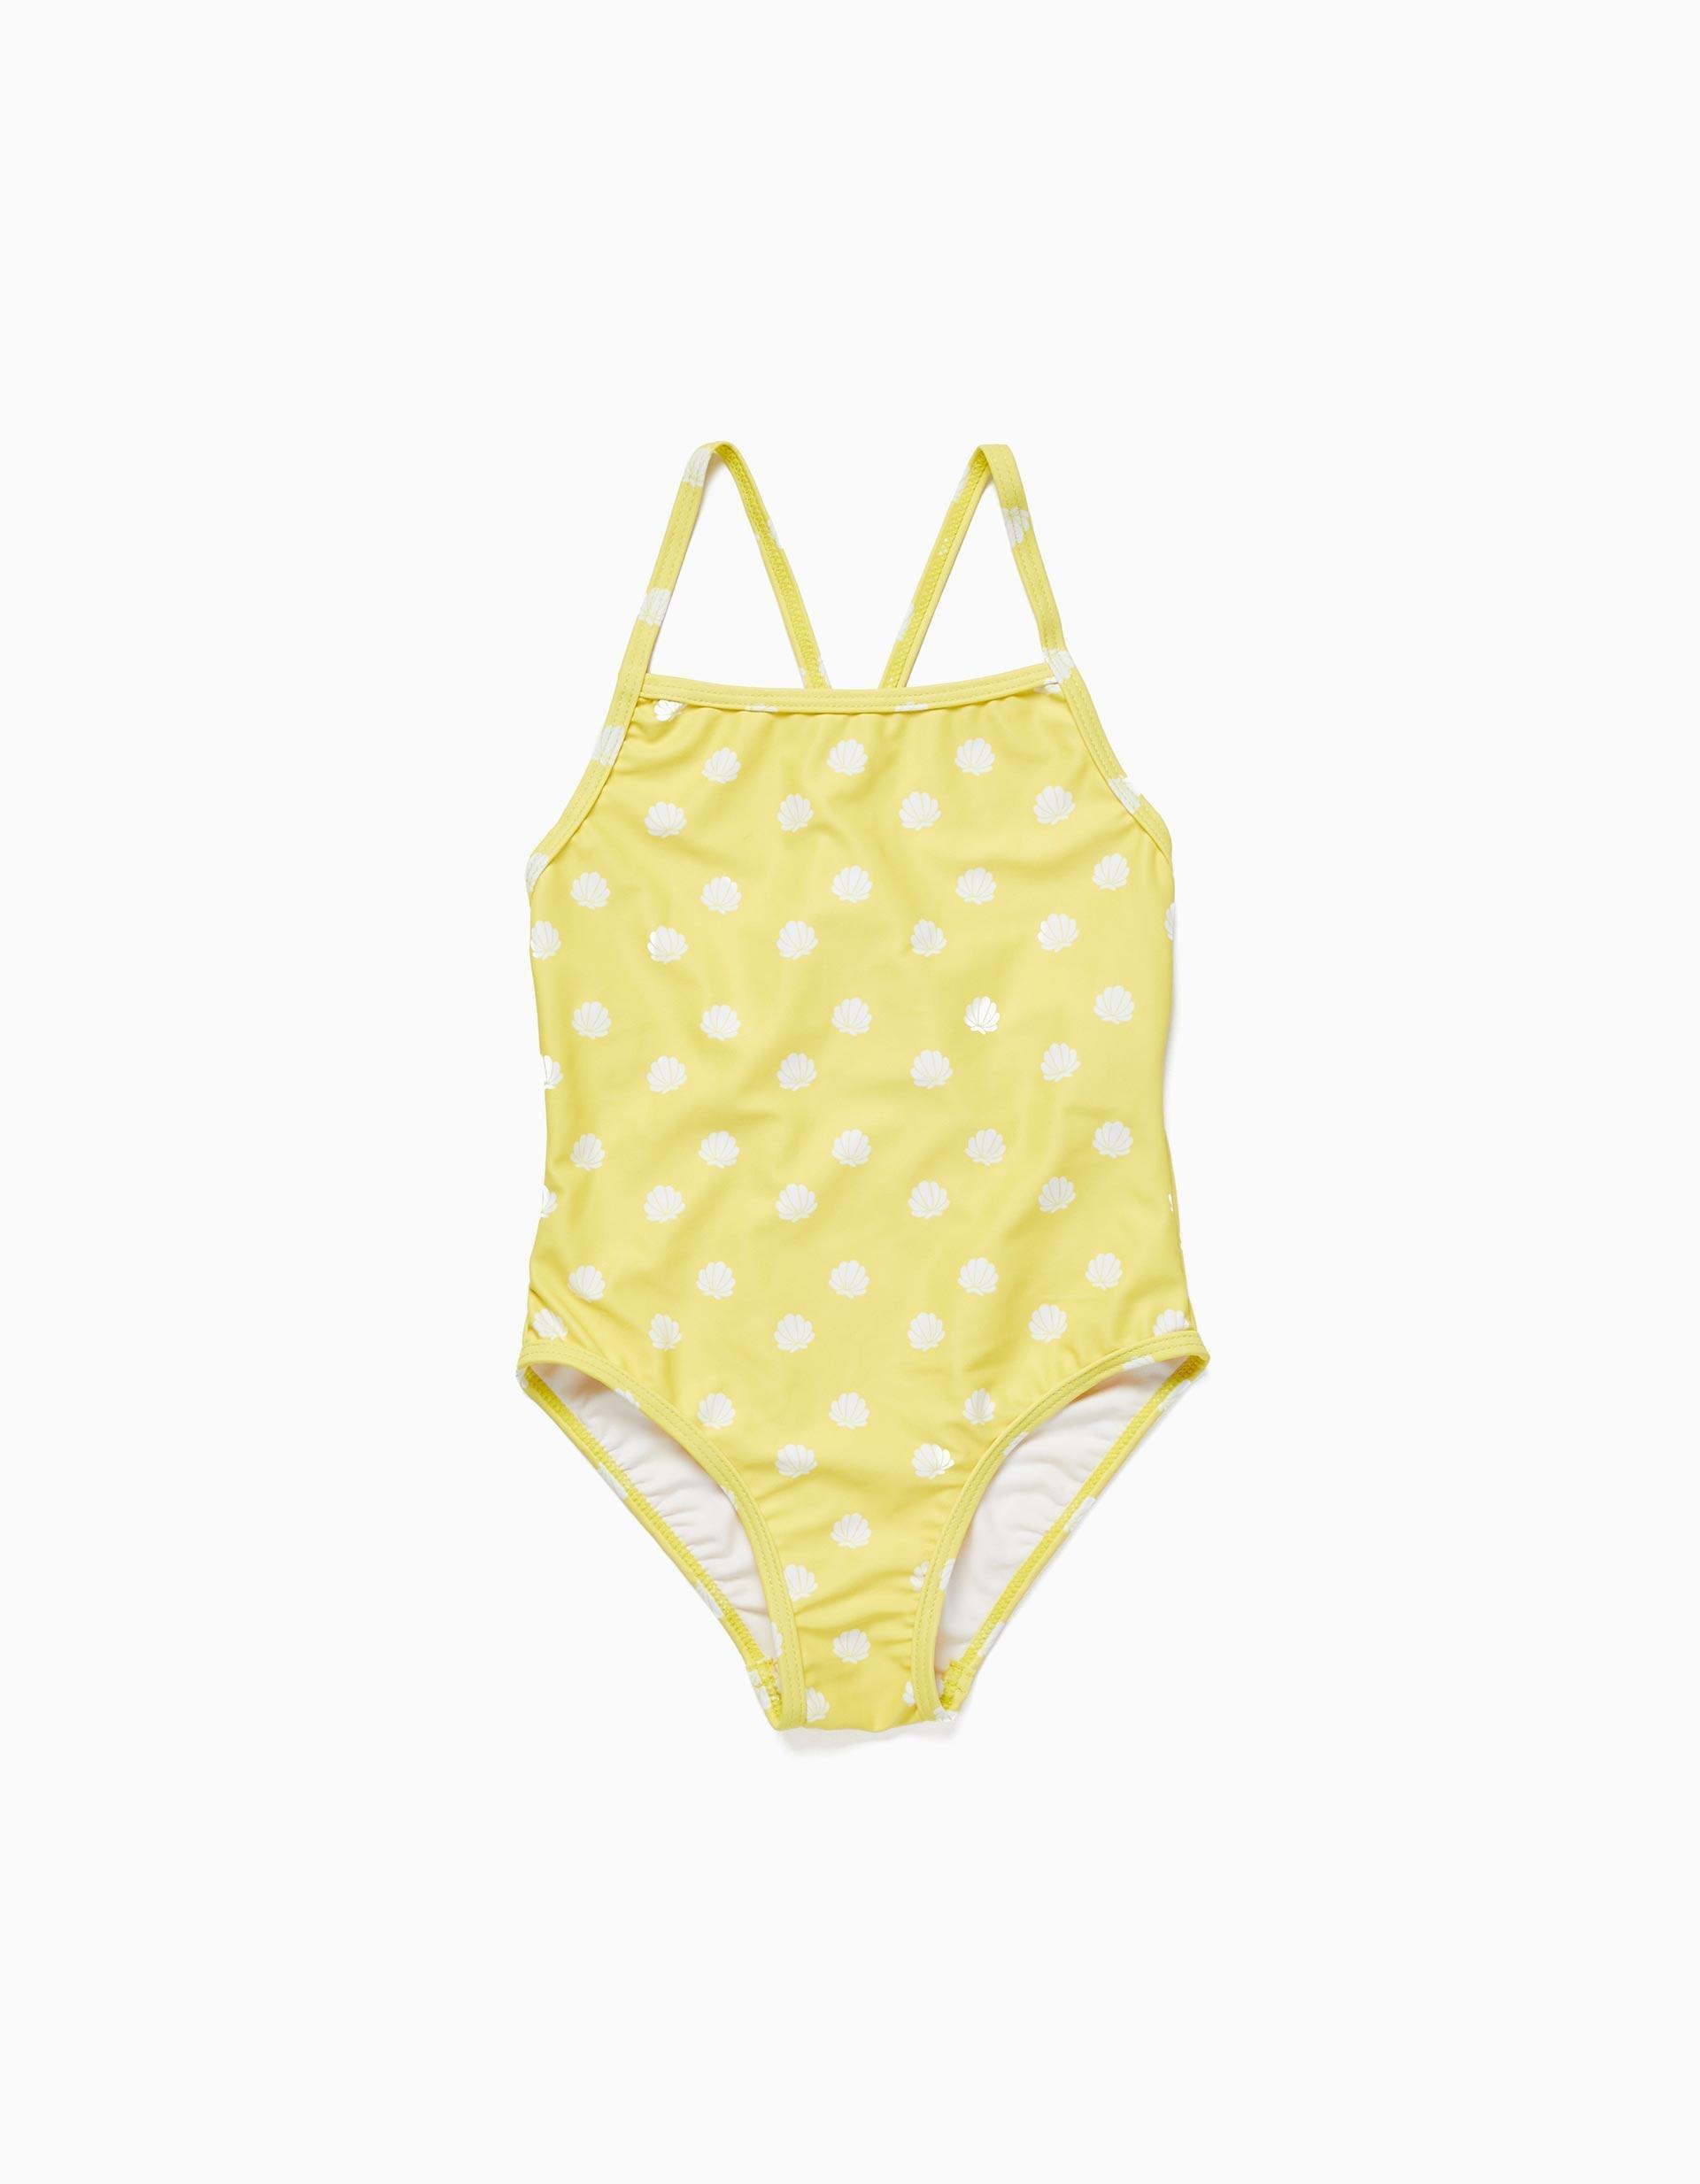 Gant - Yellow Polka Dot Swimsuit, Kids Girls